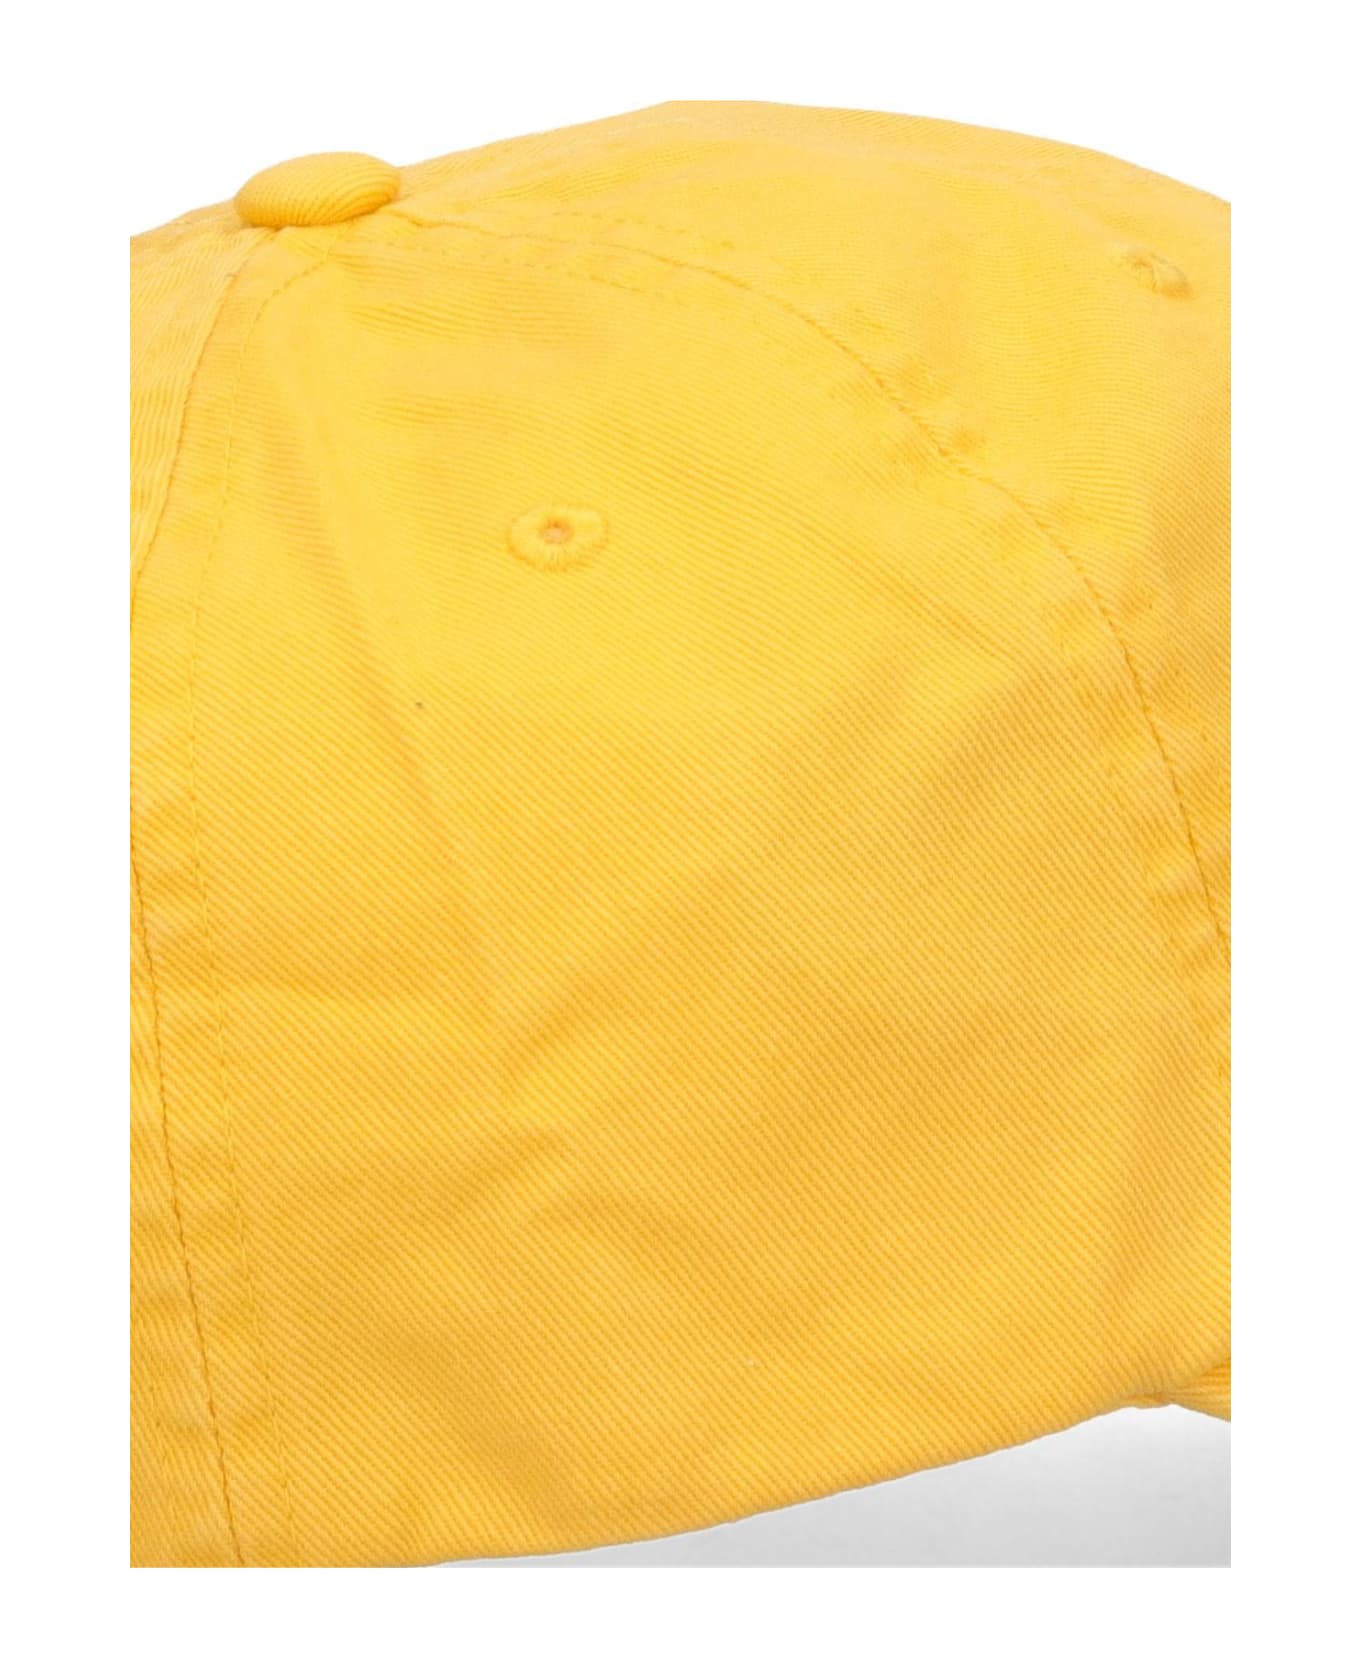 Ralph Lauren Yellow Baseball Hat With Contrasting Pony - Yellow